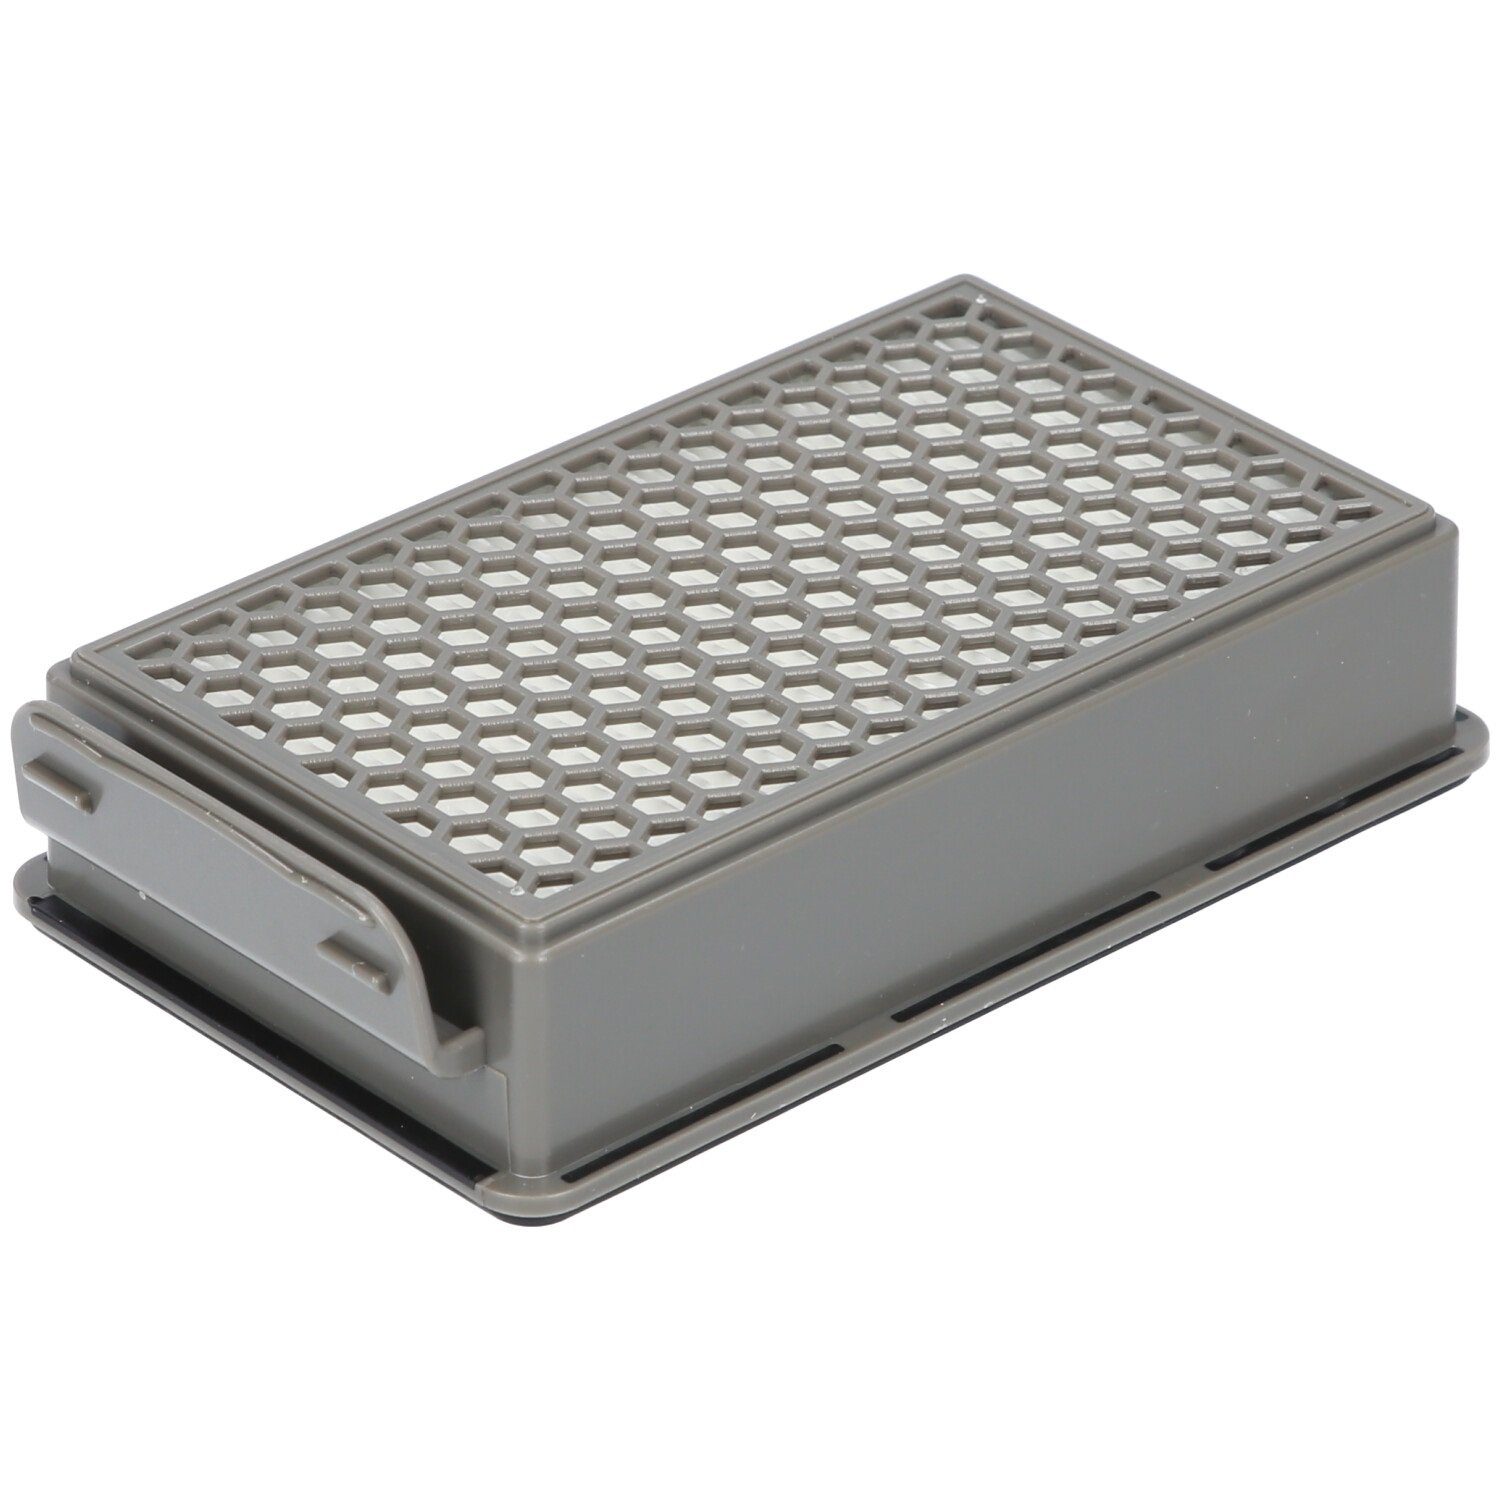 McFilter Filter-Set geeignet TW3969EA, TW3953EA, Alternative für 2x 2x Tefal für TW3931EA, TW3985EA,TW3999EA, Rundfilter, Filterkassette, ZR005901